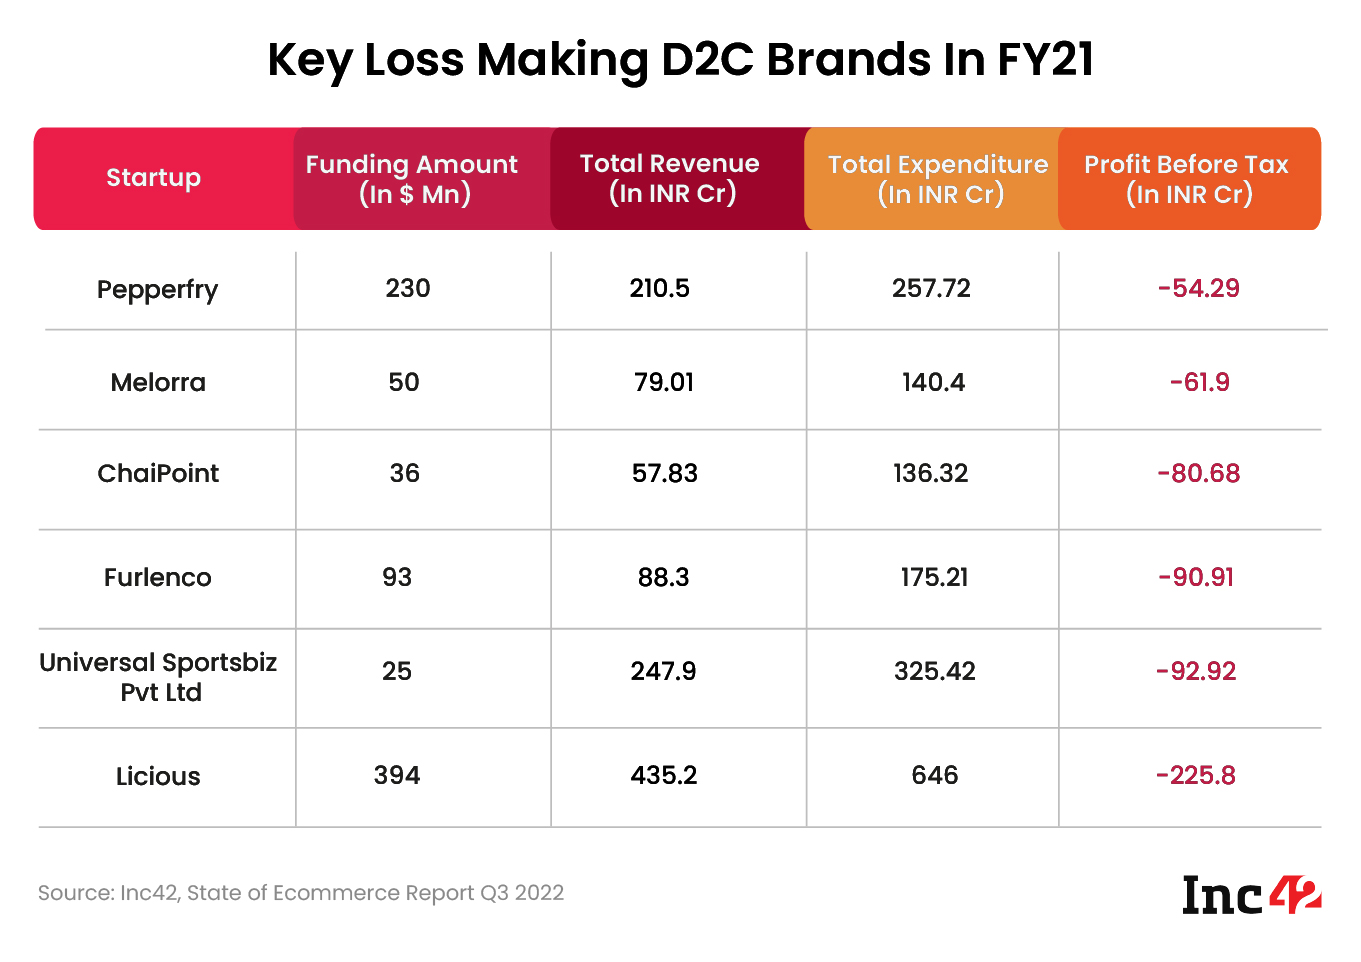 Key Loss Making D2C Brands in FY21